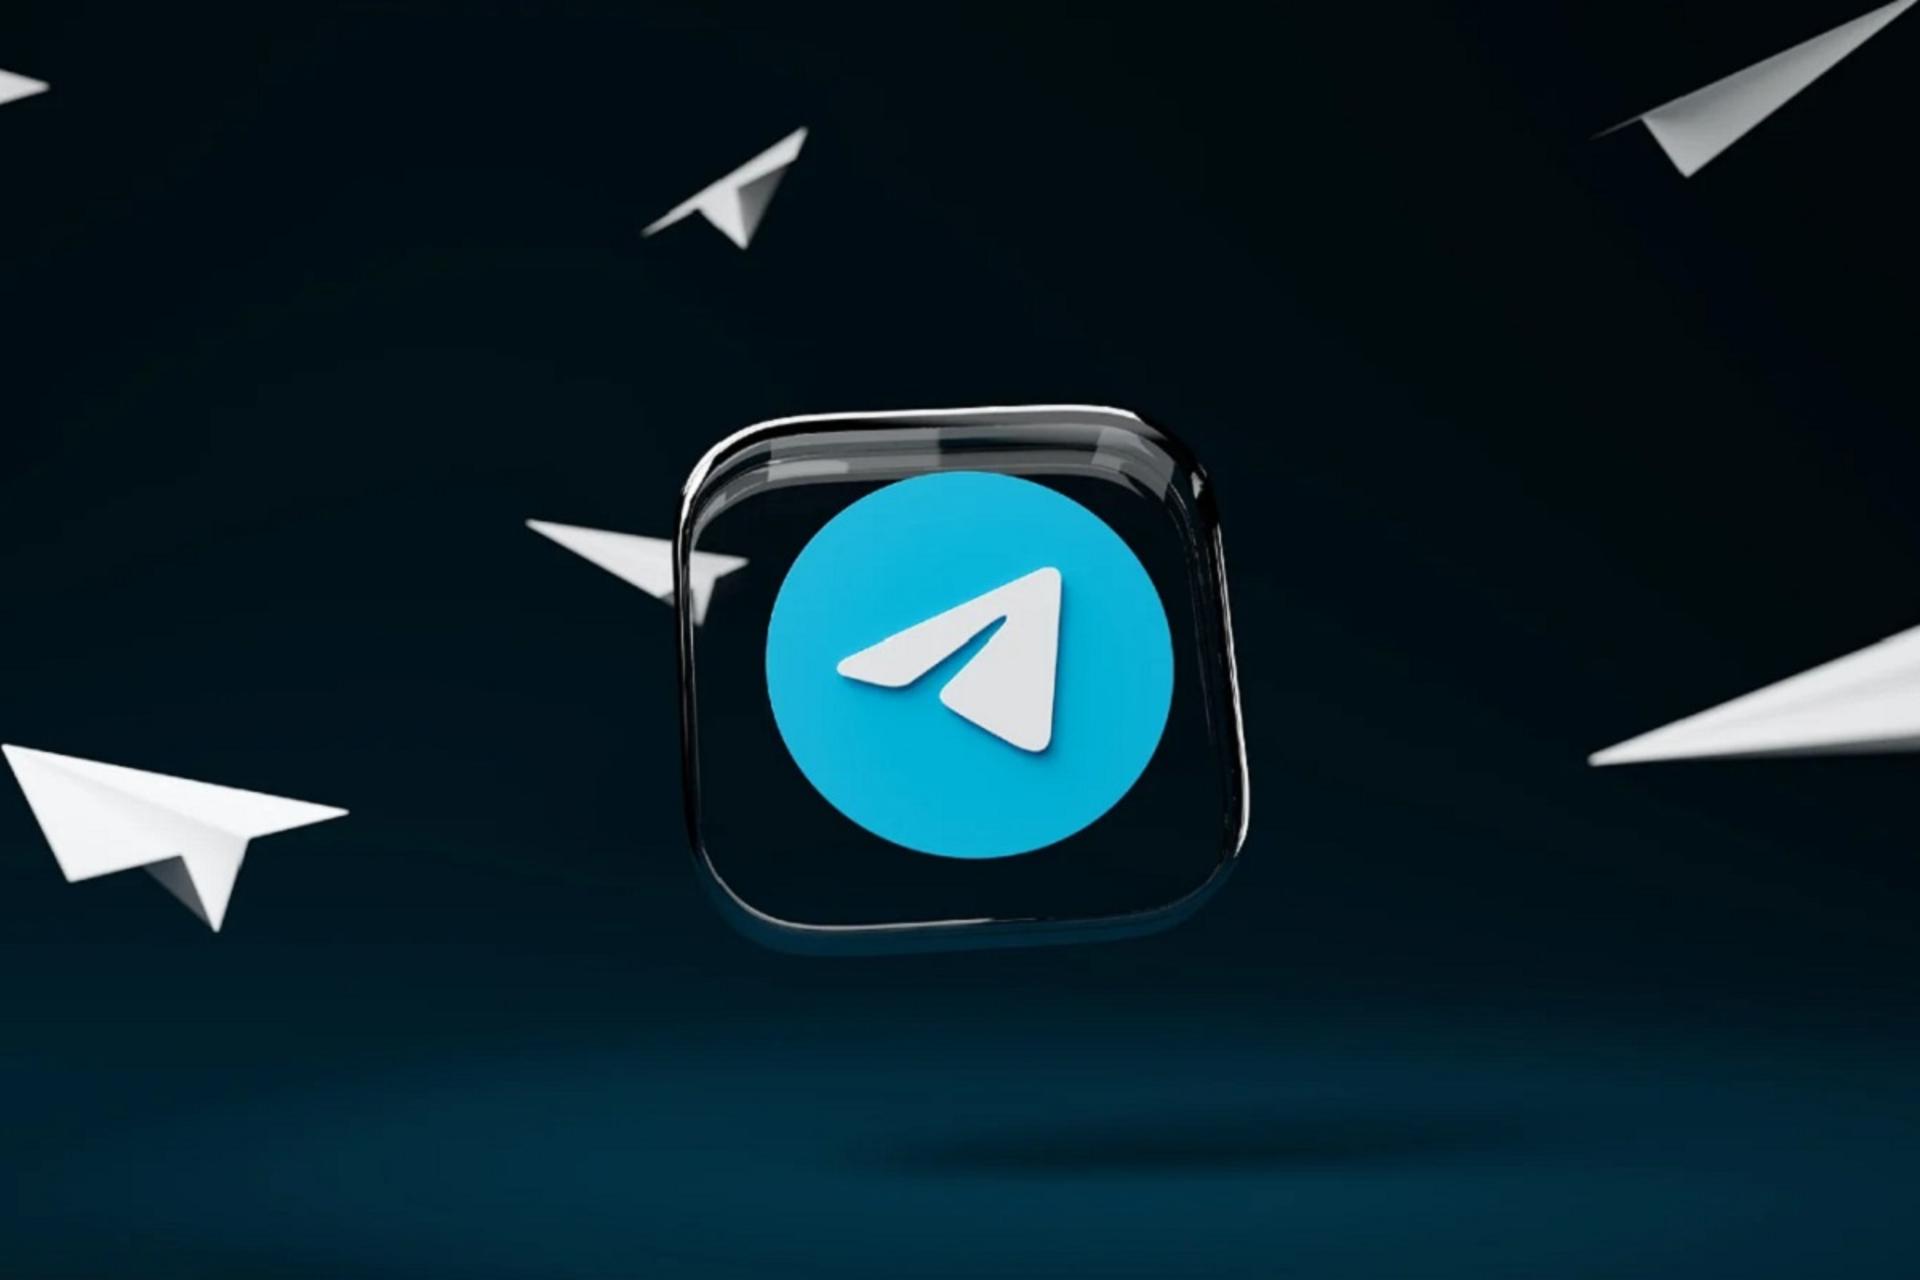  گروه و کانال تلگرام